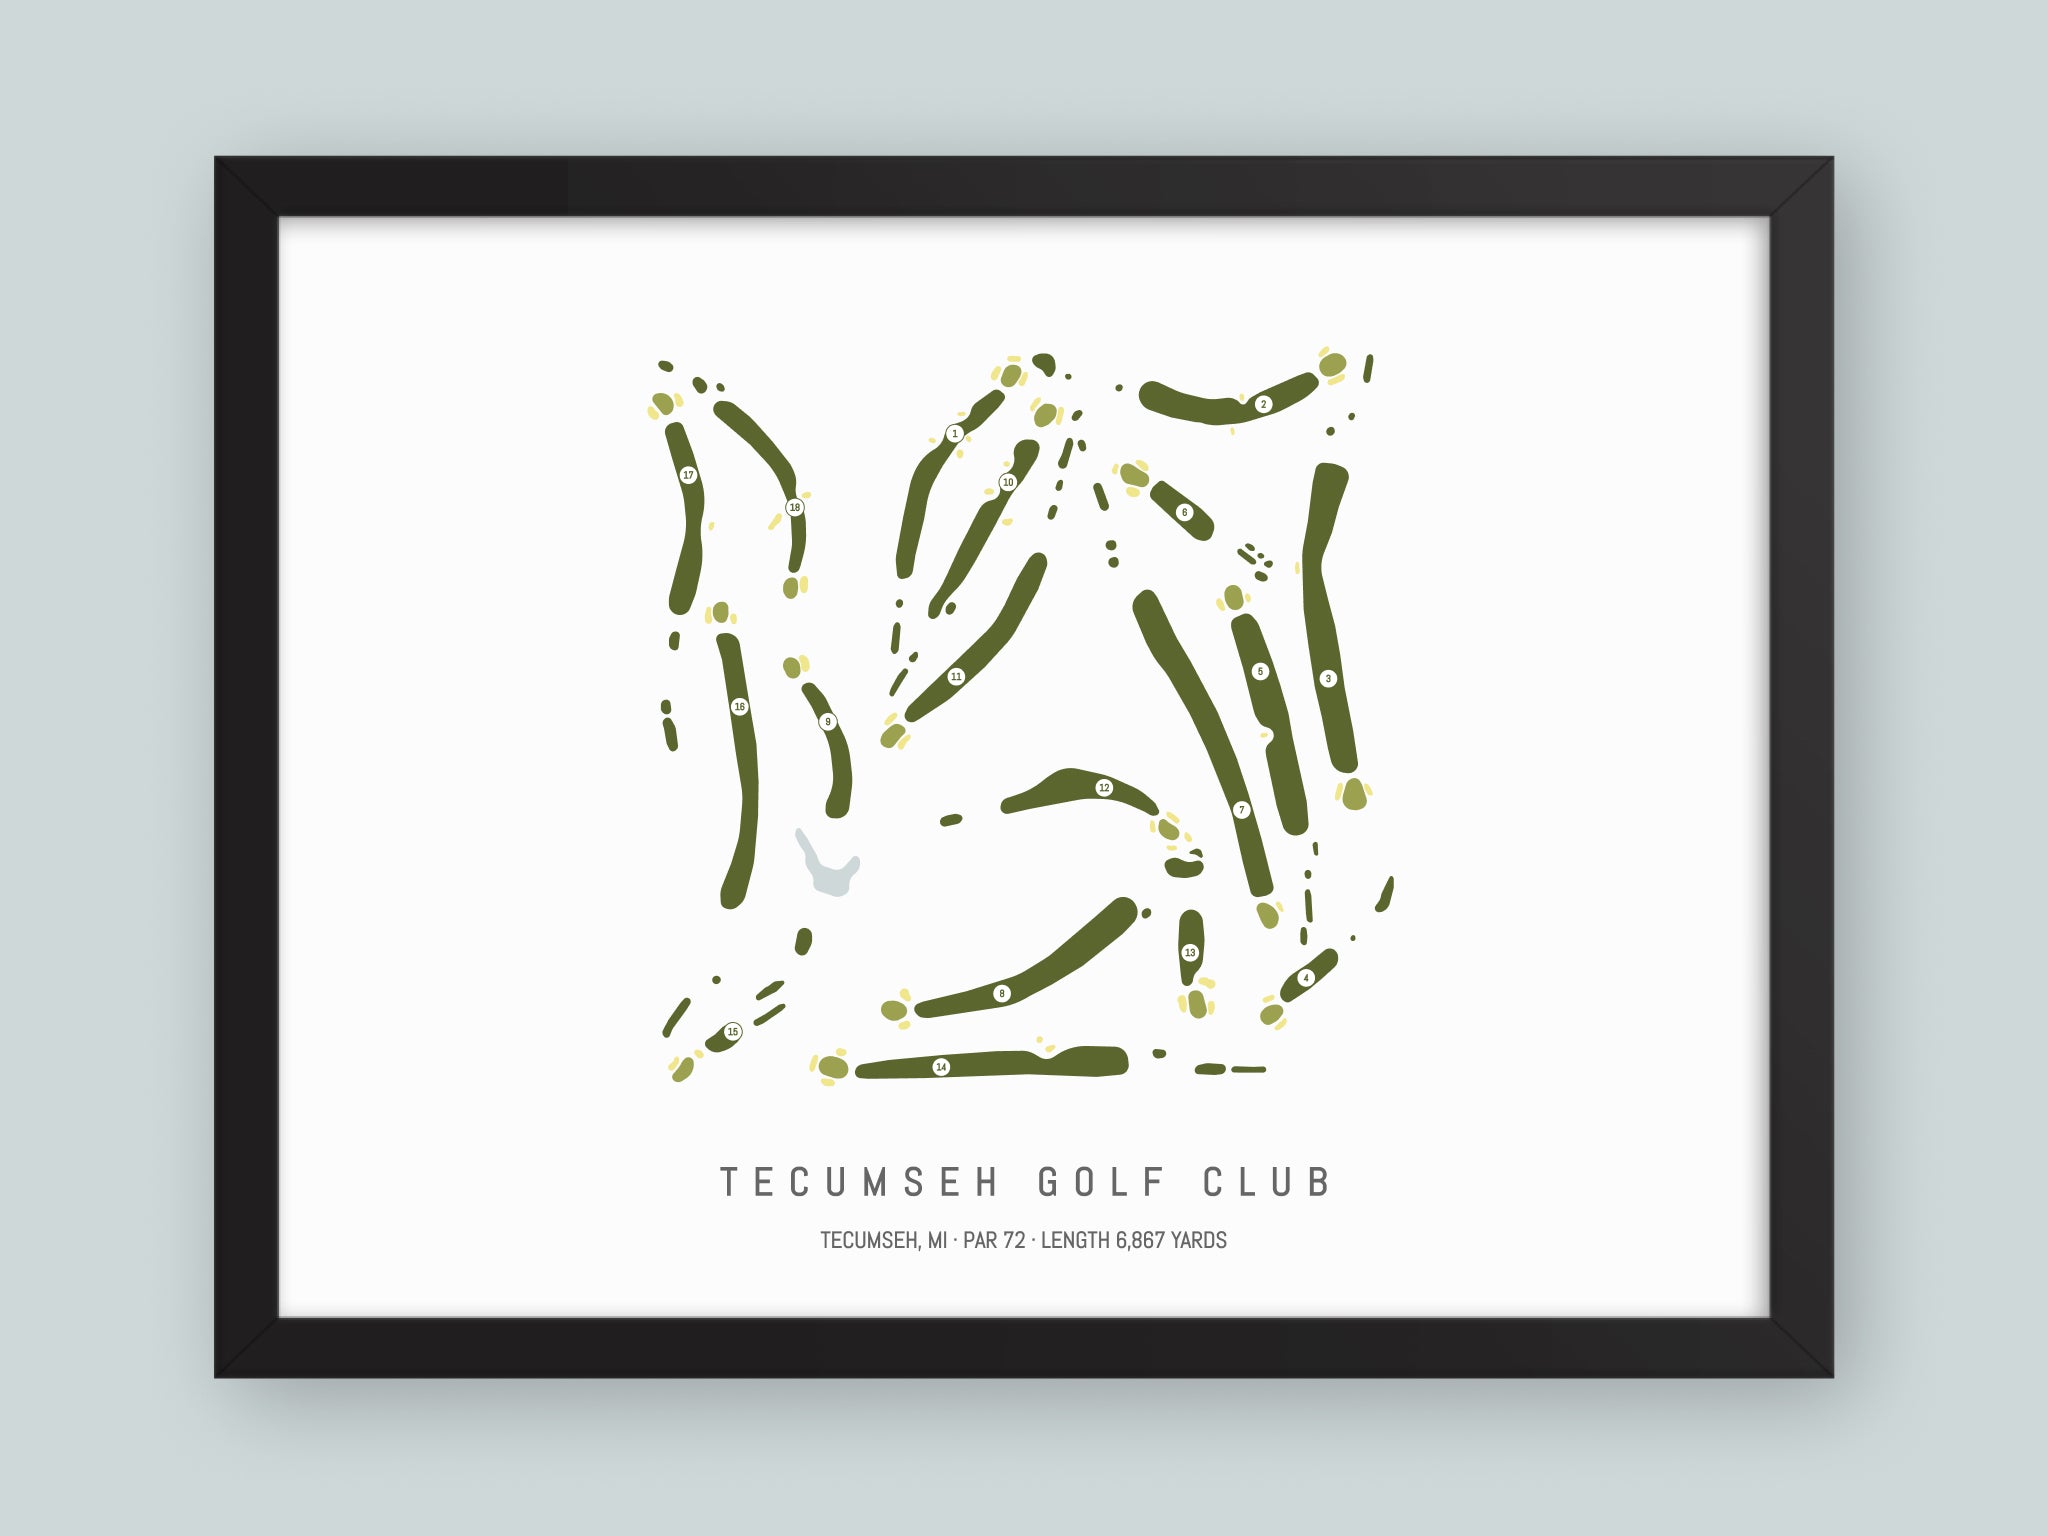 Tecumseh-Golf-Club-MI--Black-Frame-24x18-With-Hole-Numbers